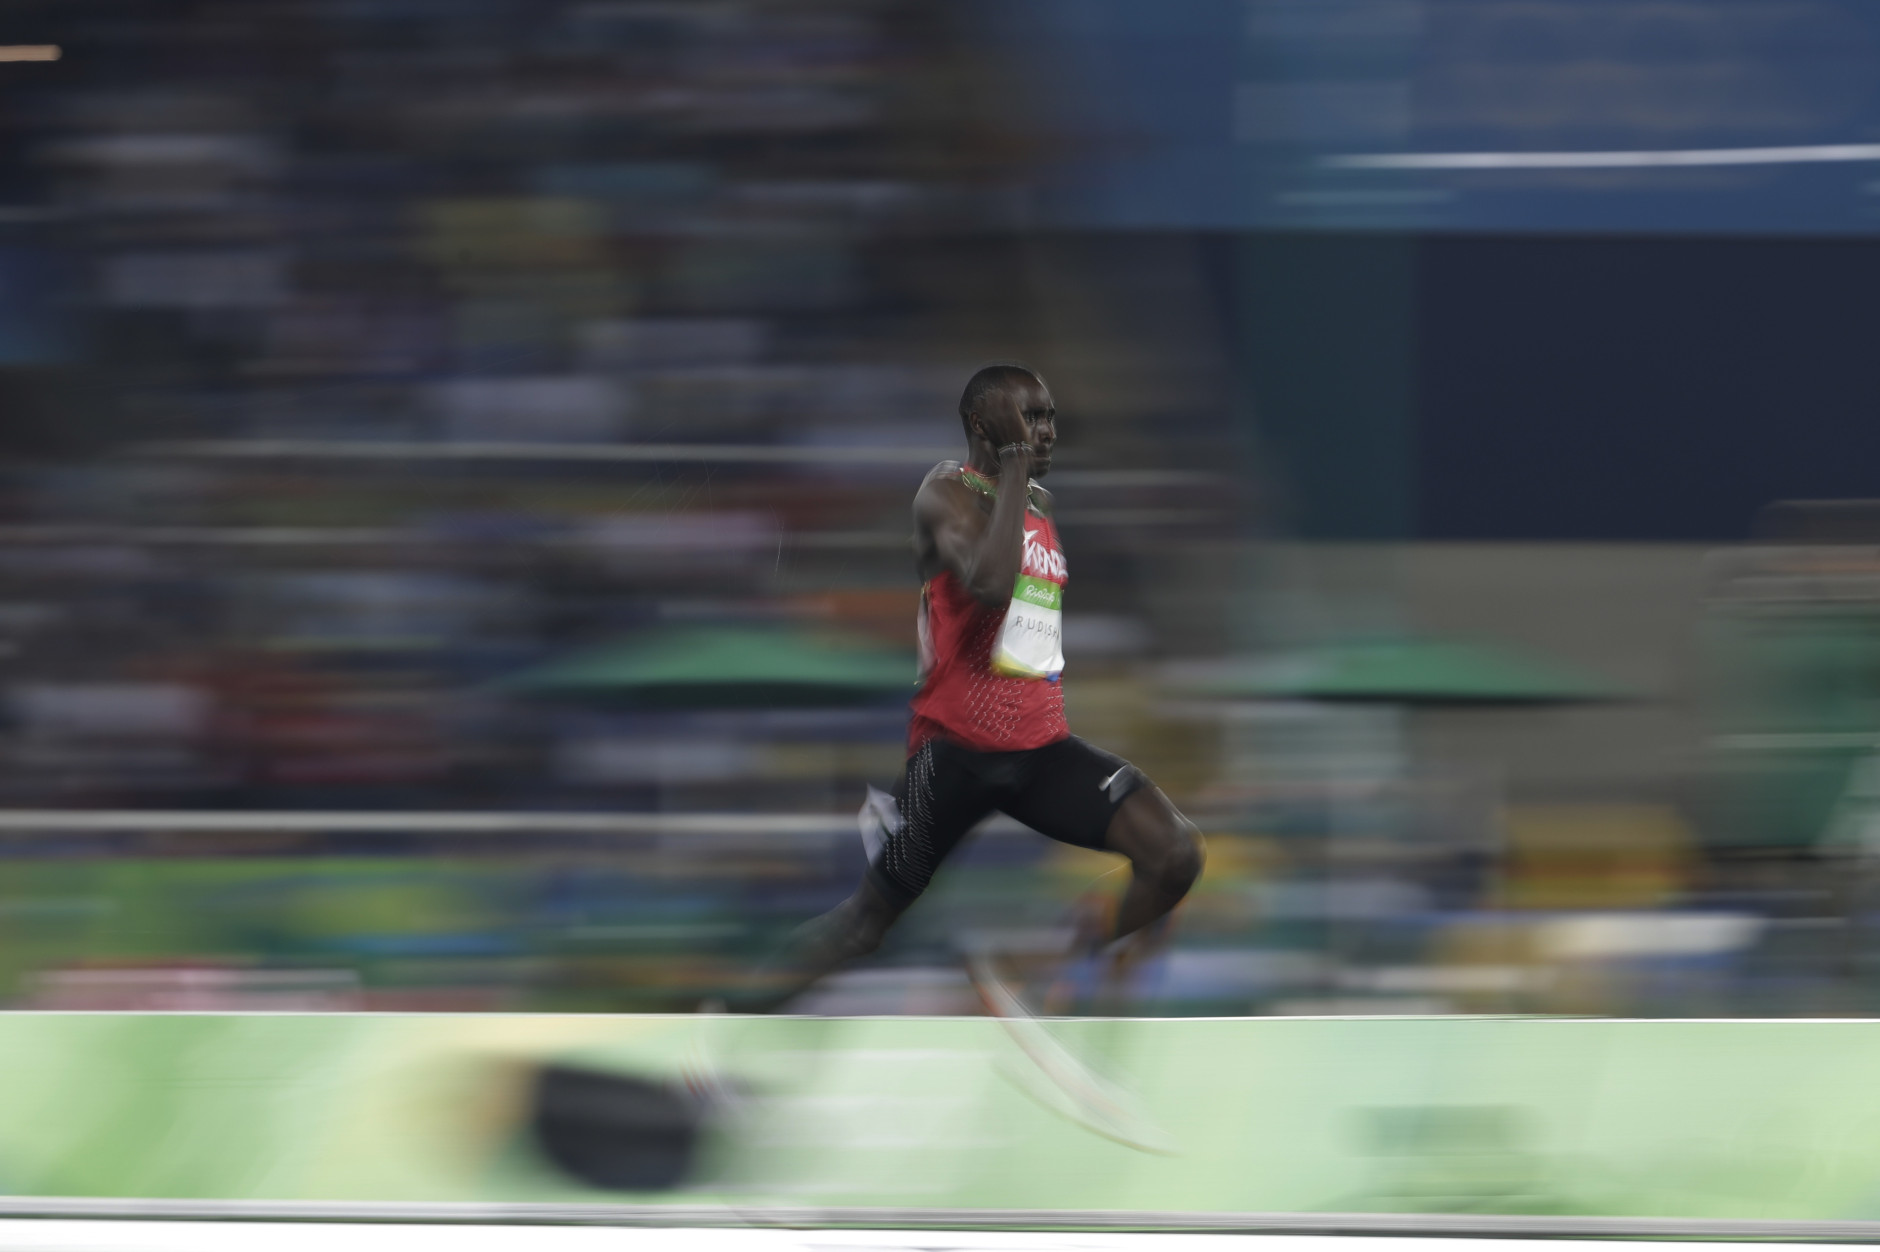 Kenya's David Lekuta Rudisha competes in the men's 800-meter final during the athletics competitions of the 2016 Summer Olympics at the Olympic stadium in Rio de Janeiro, Brazil, Monday, Aug. 15, 2016. (AP Photo/Natacha Pisarenko)